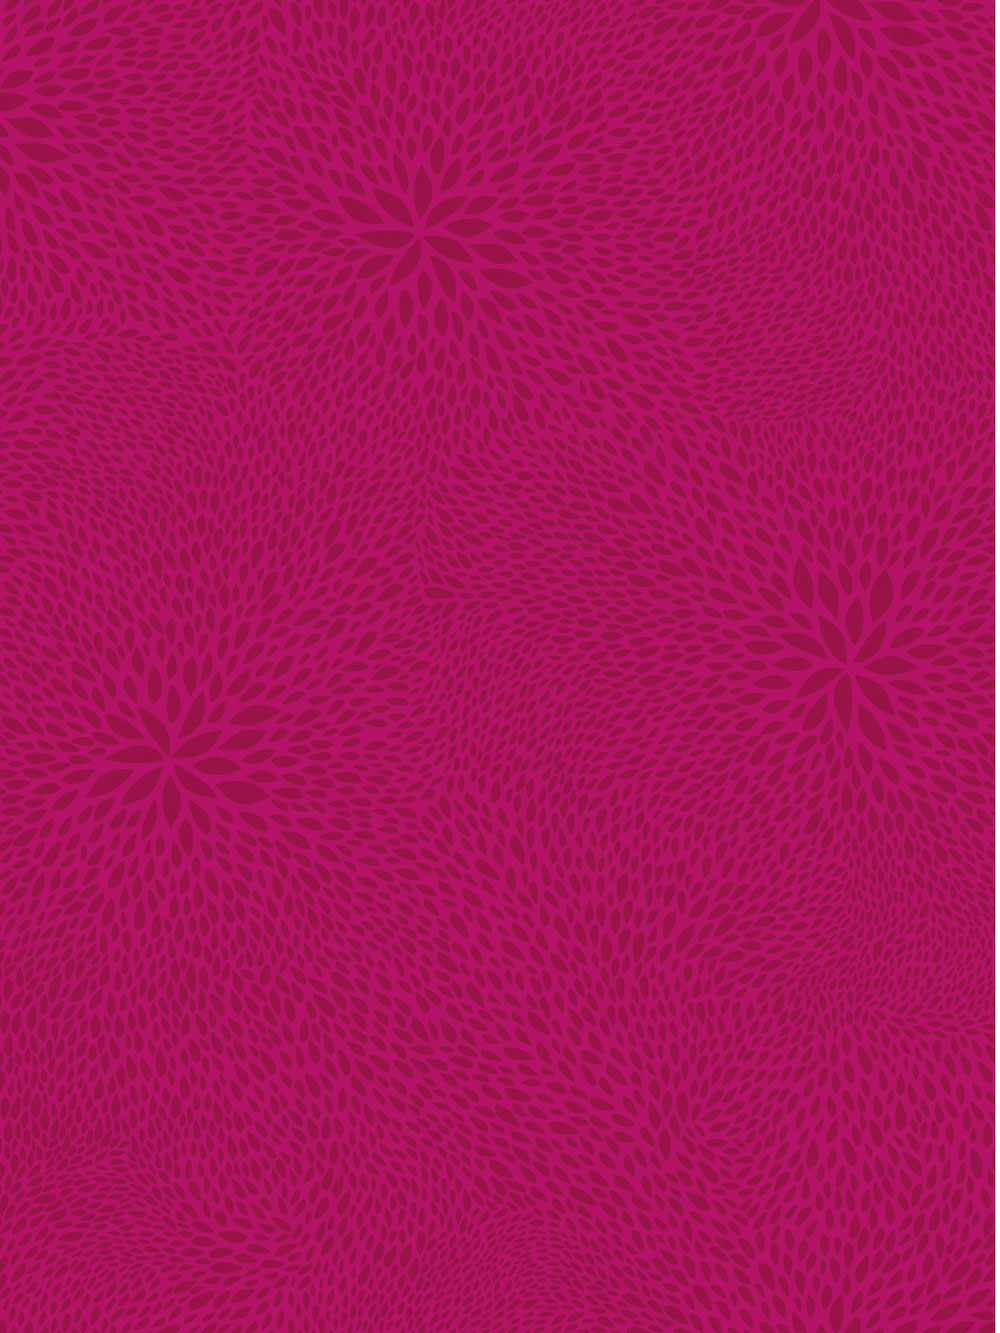 Décopatch-Papier 653 Muster Blütenblätter pink, 30 x 40 cm